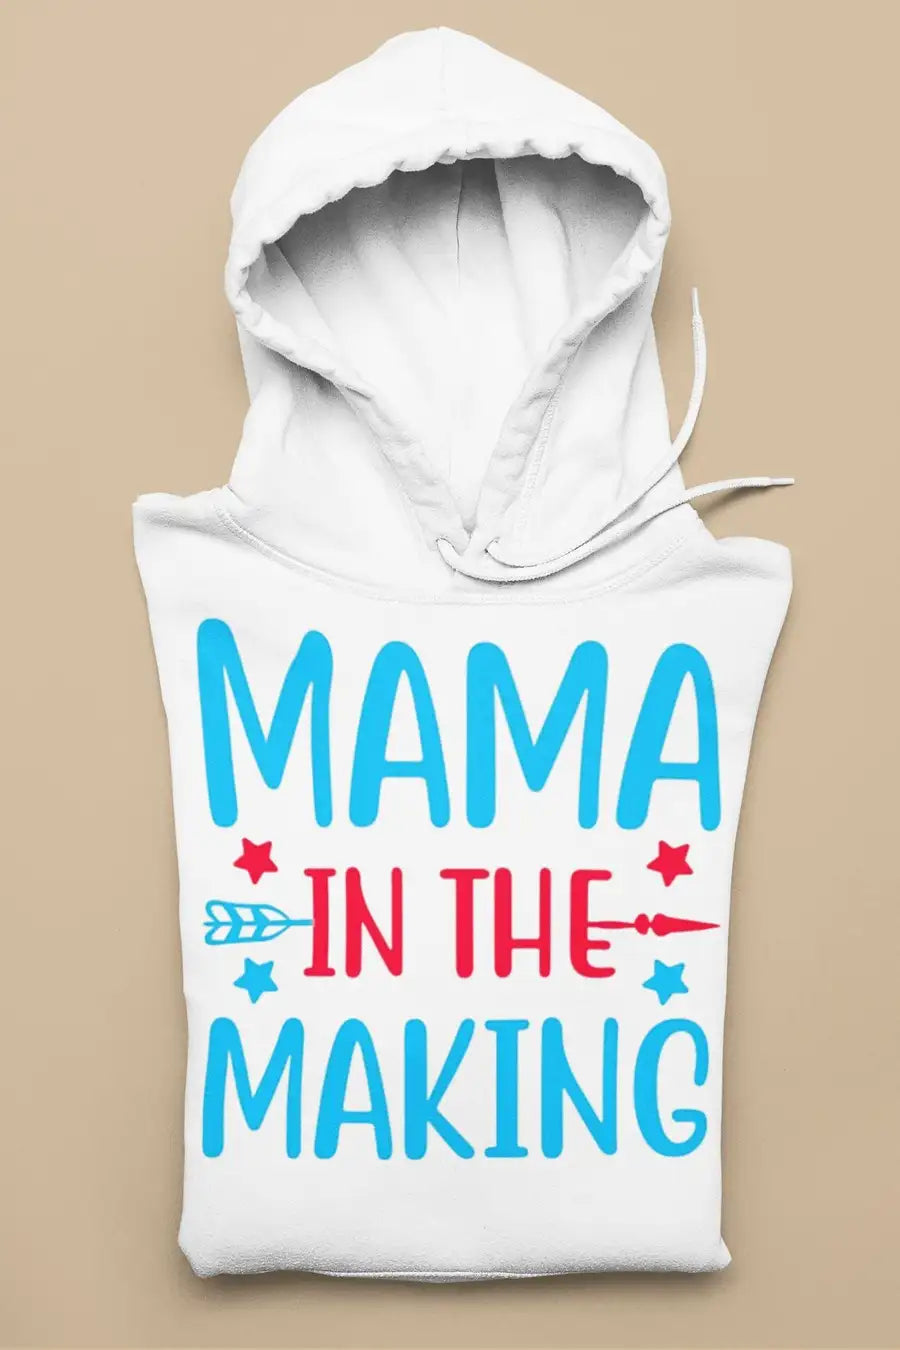 Mama in the Making Hoodie For Women | Premium Design | Catch My Drift India - Catch My Drift India  hoodie, hoodies, jacket, mom, mother, parents, trending, winter